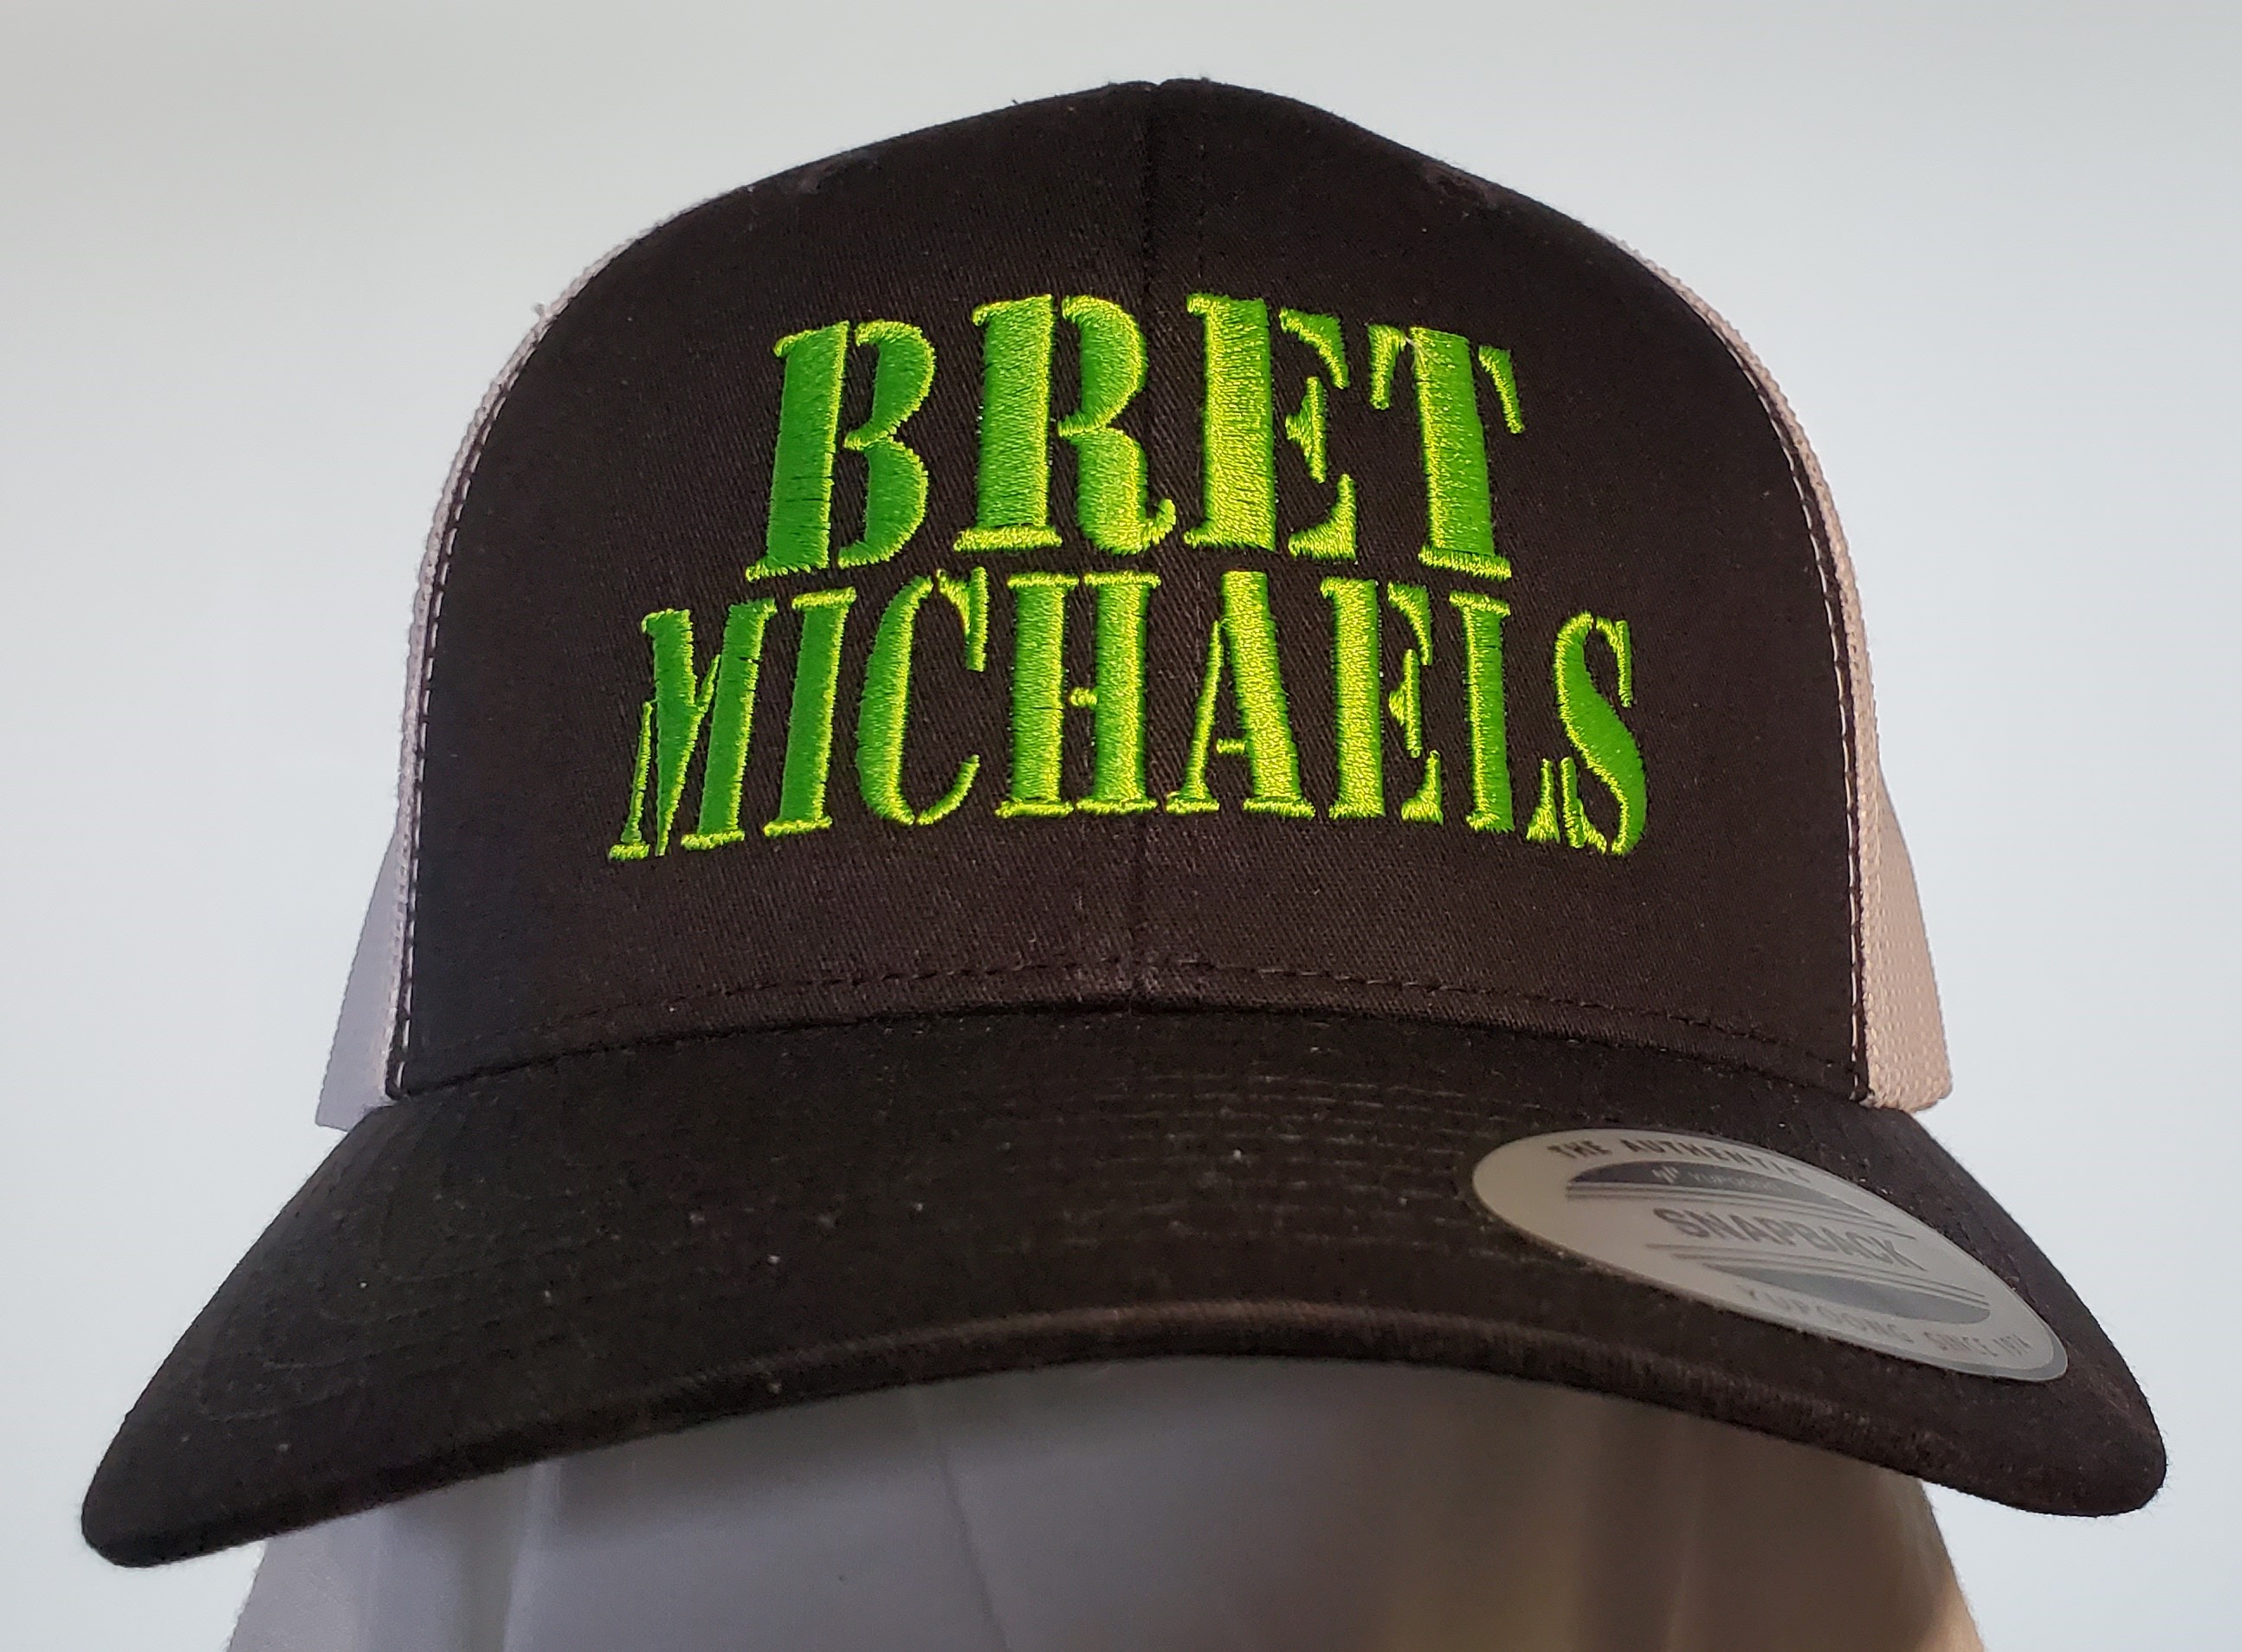 Bret Michaels Lime Green Hat Bret Michaels, Brett Michaels, Bret Micheals, Brett Micheals, LIfestyle, hat, lime green